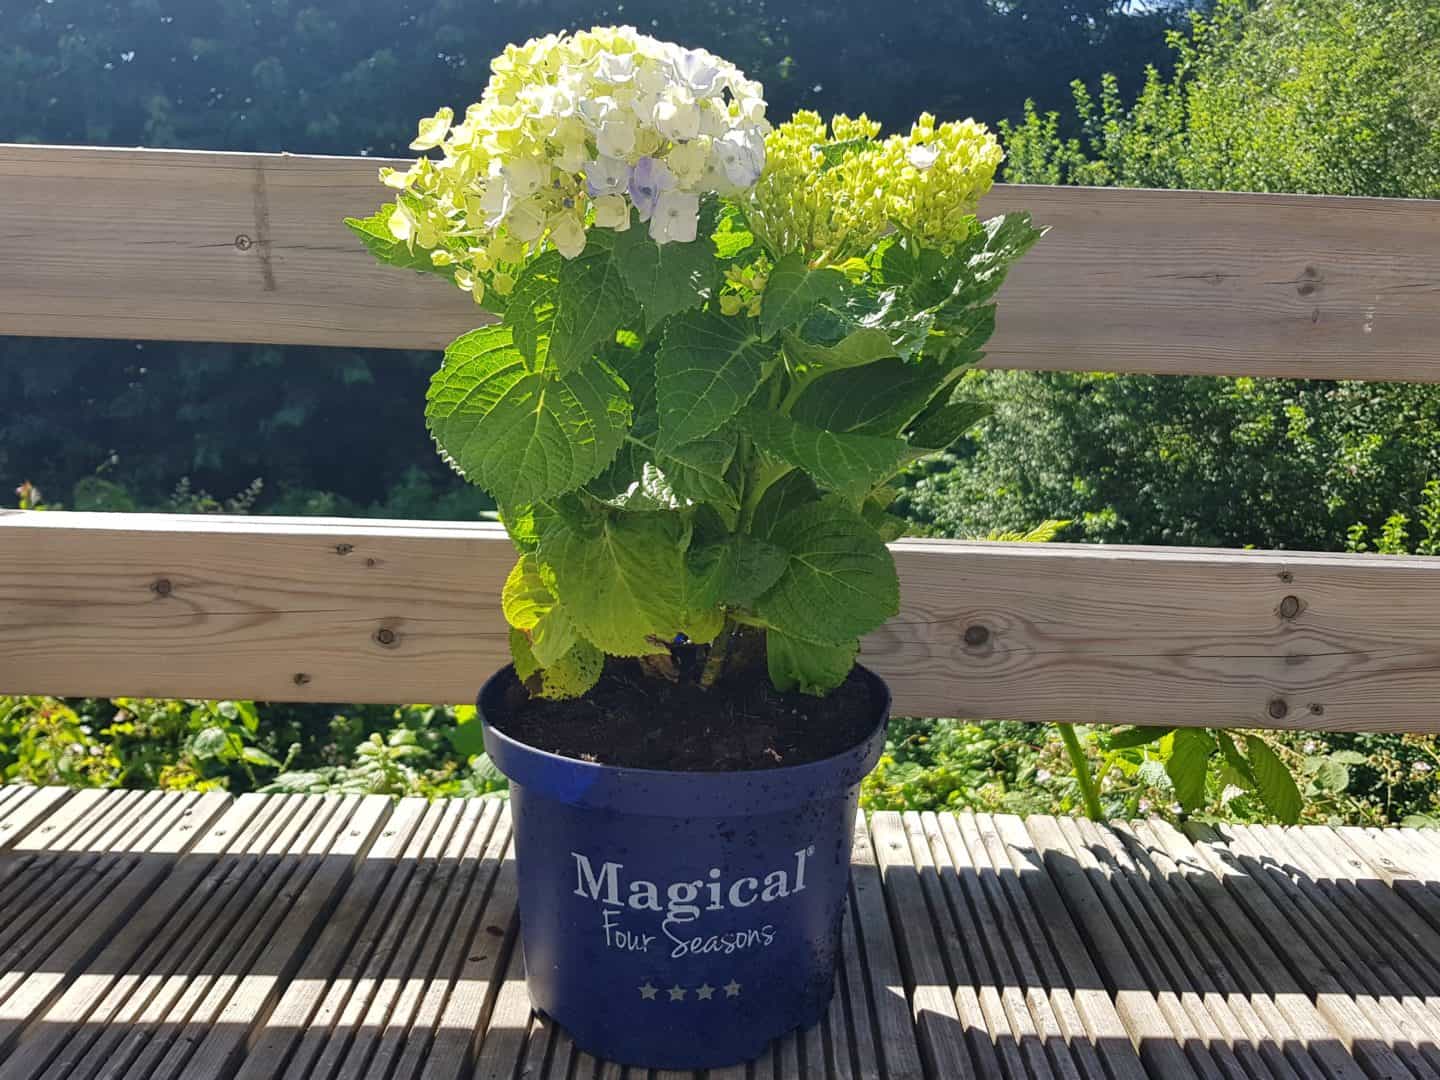 Magical Hydrangeas in pot